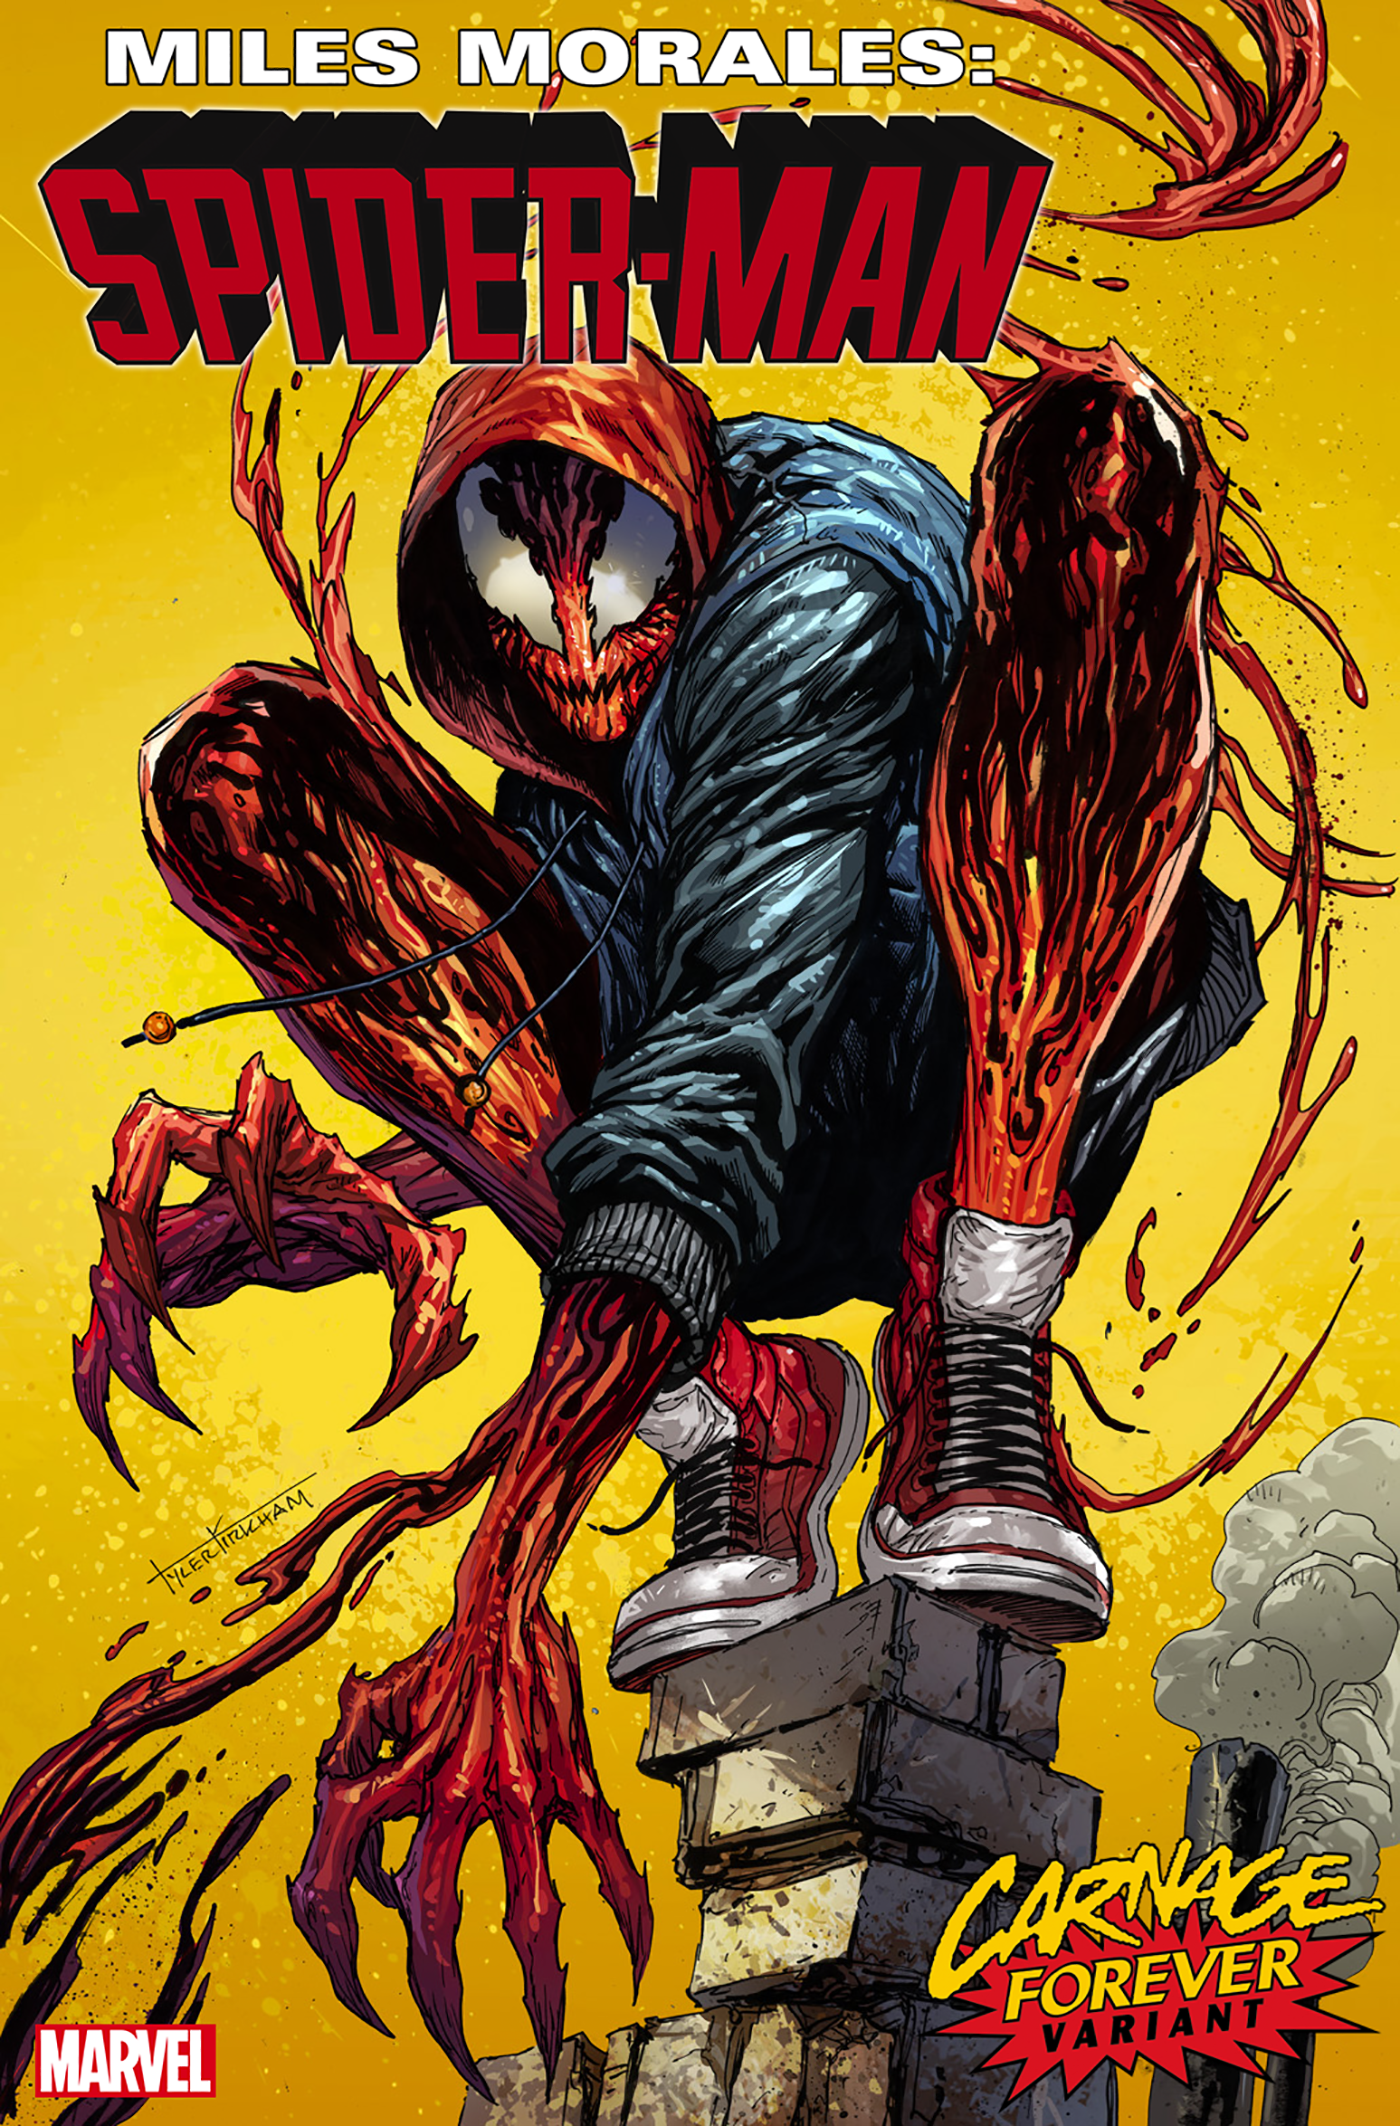 Miles Morales Spider-Man #36 C Tyler Kirkham Carnage Forever Variant (03/30/2022) Marvel